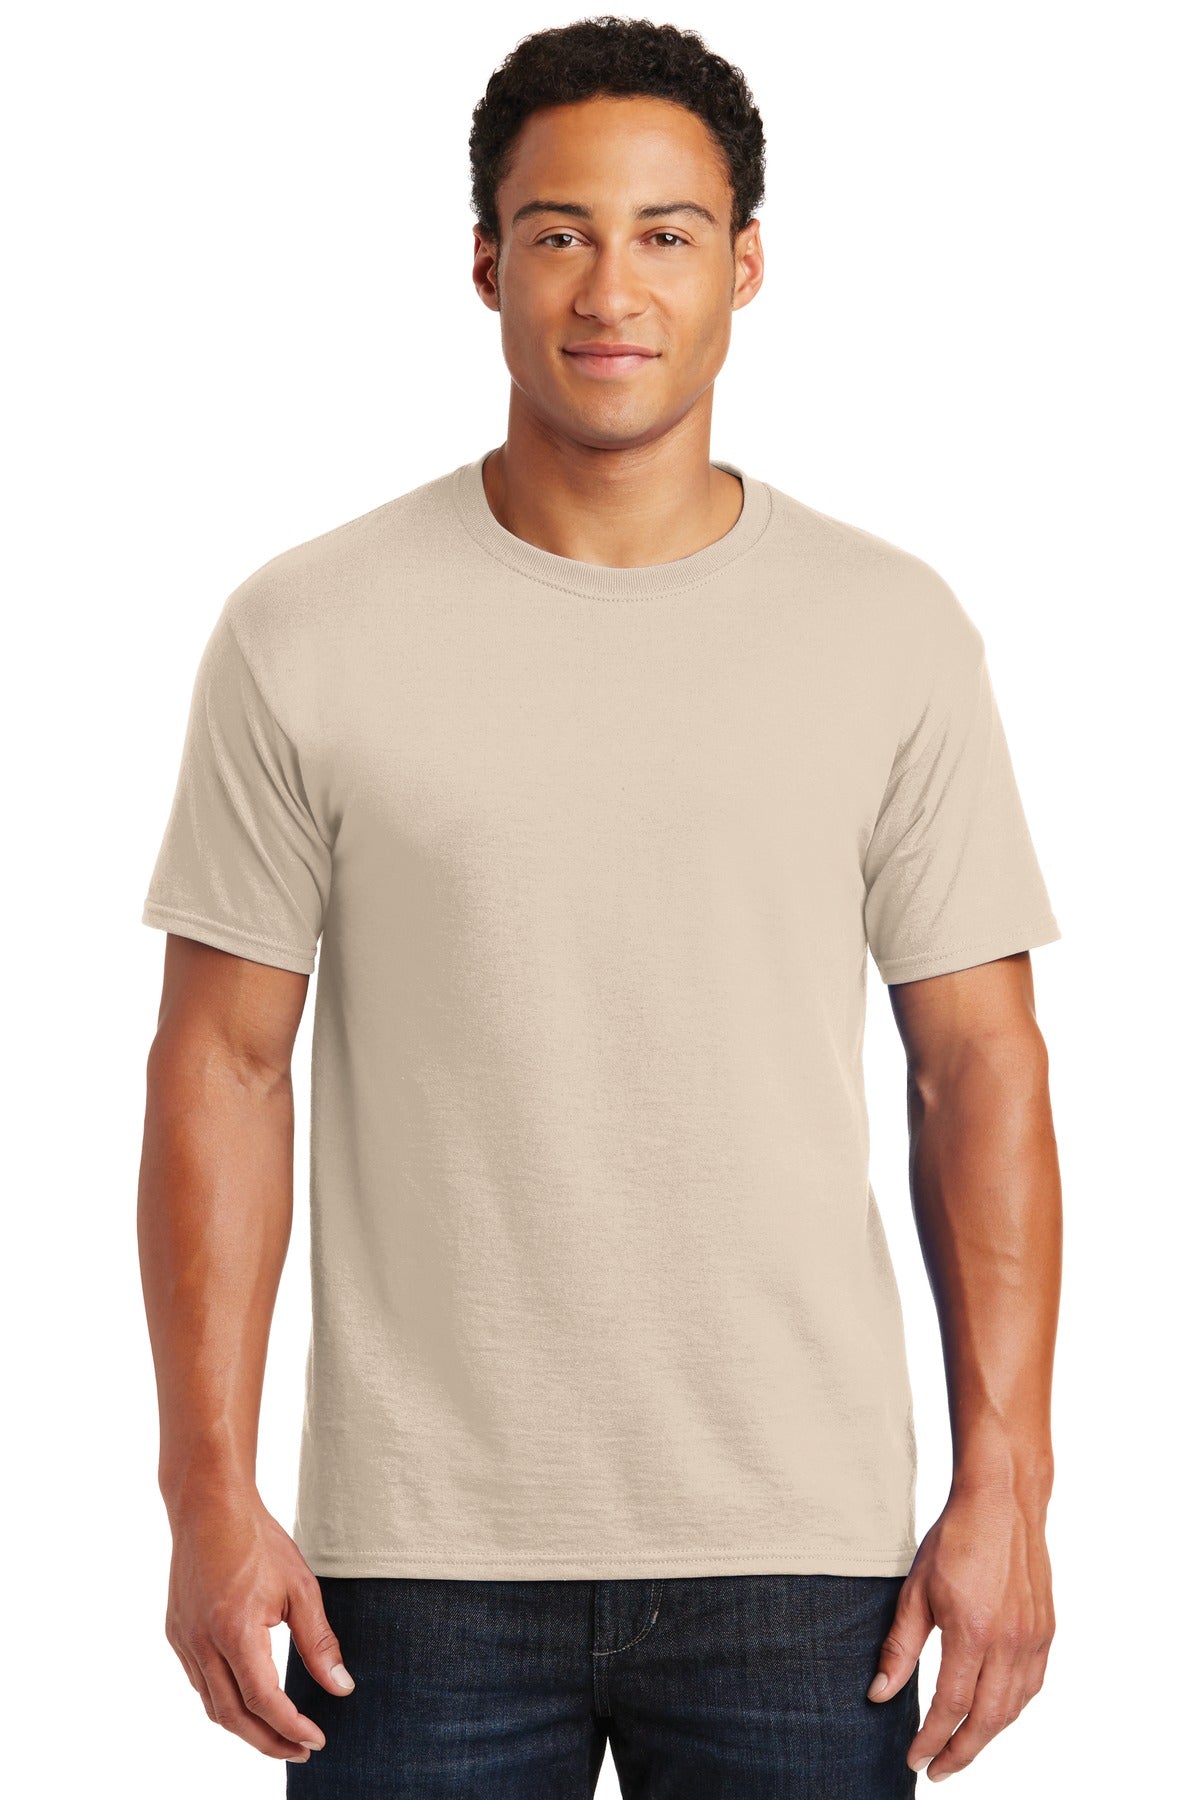 JERZEES® - Dri-Power® 50/50 Cotton/Poly T-Shirt. 29M [Sandstone] - DFW Impression